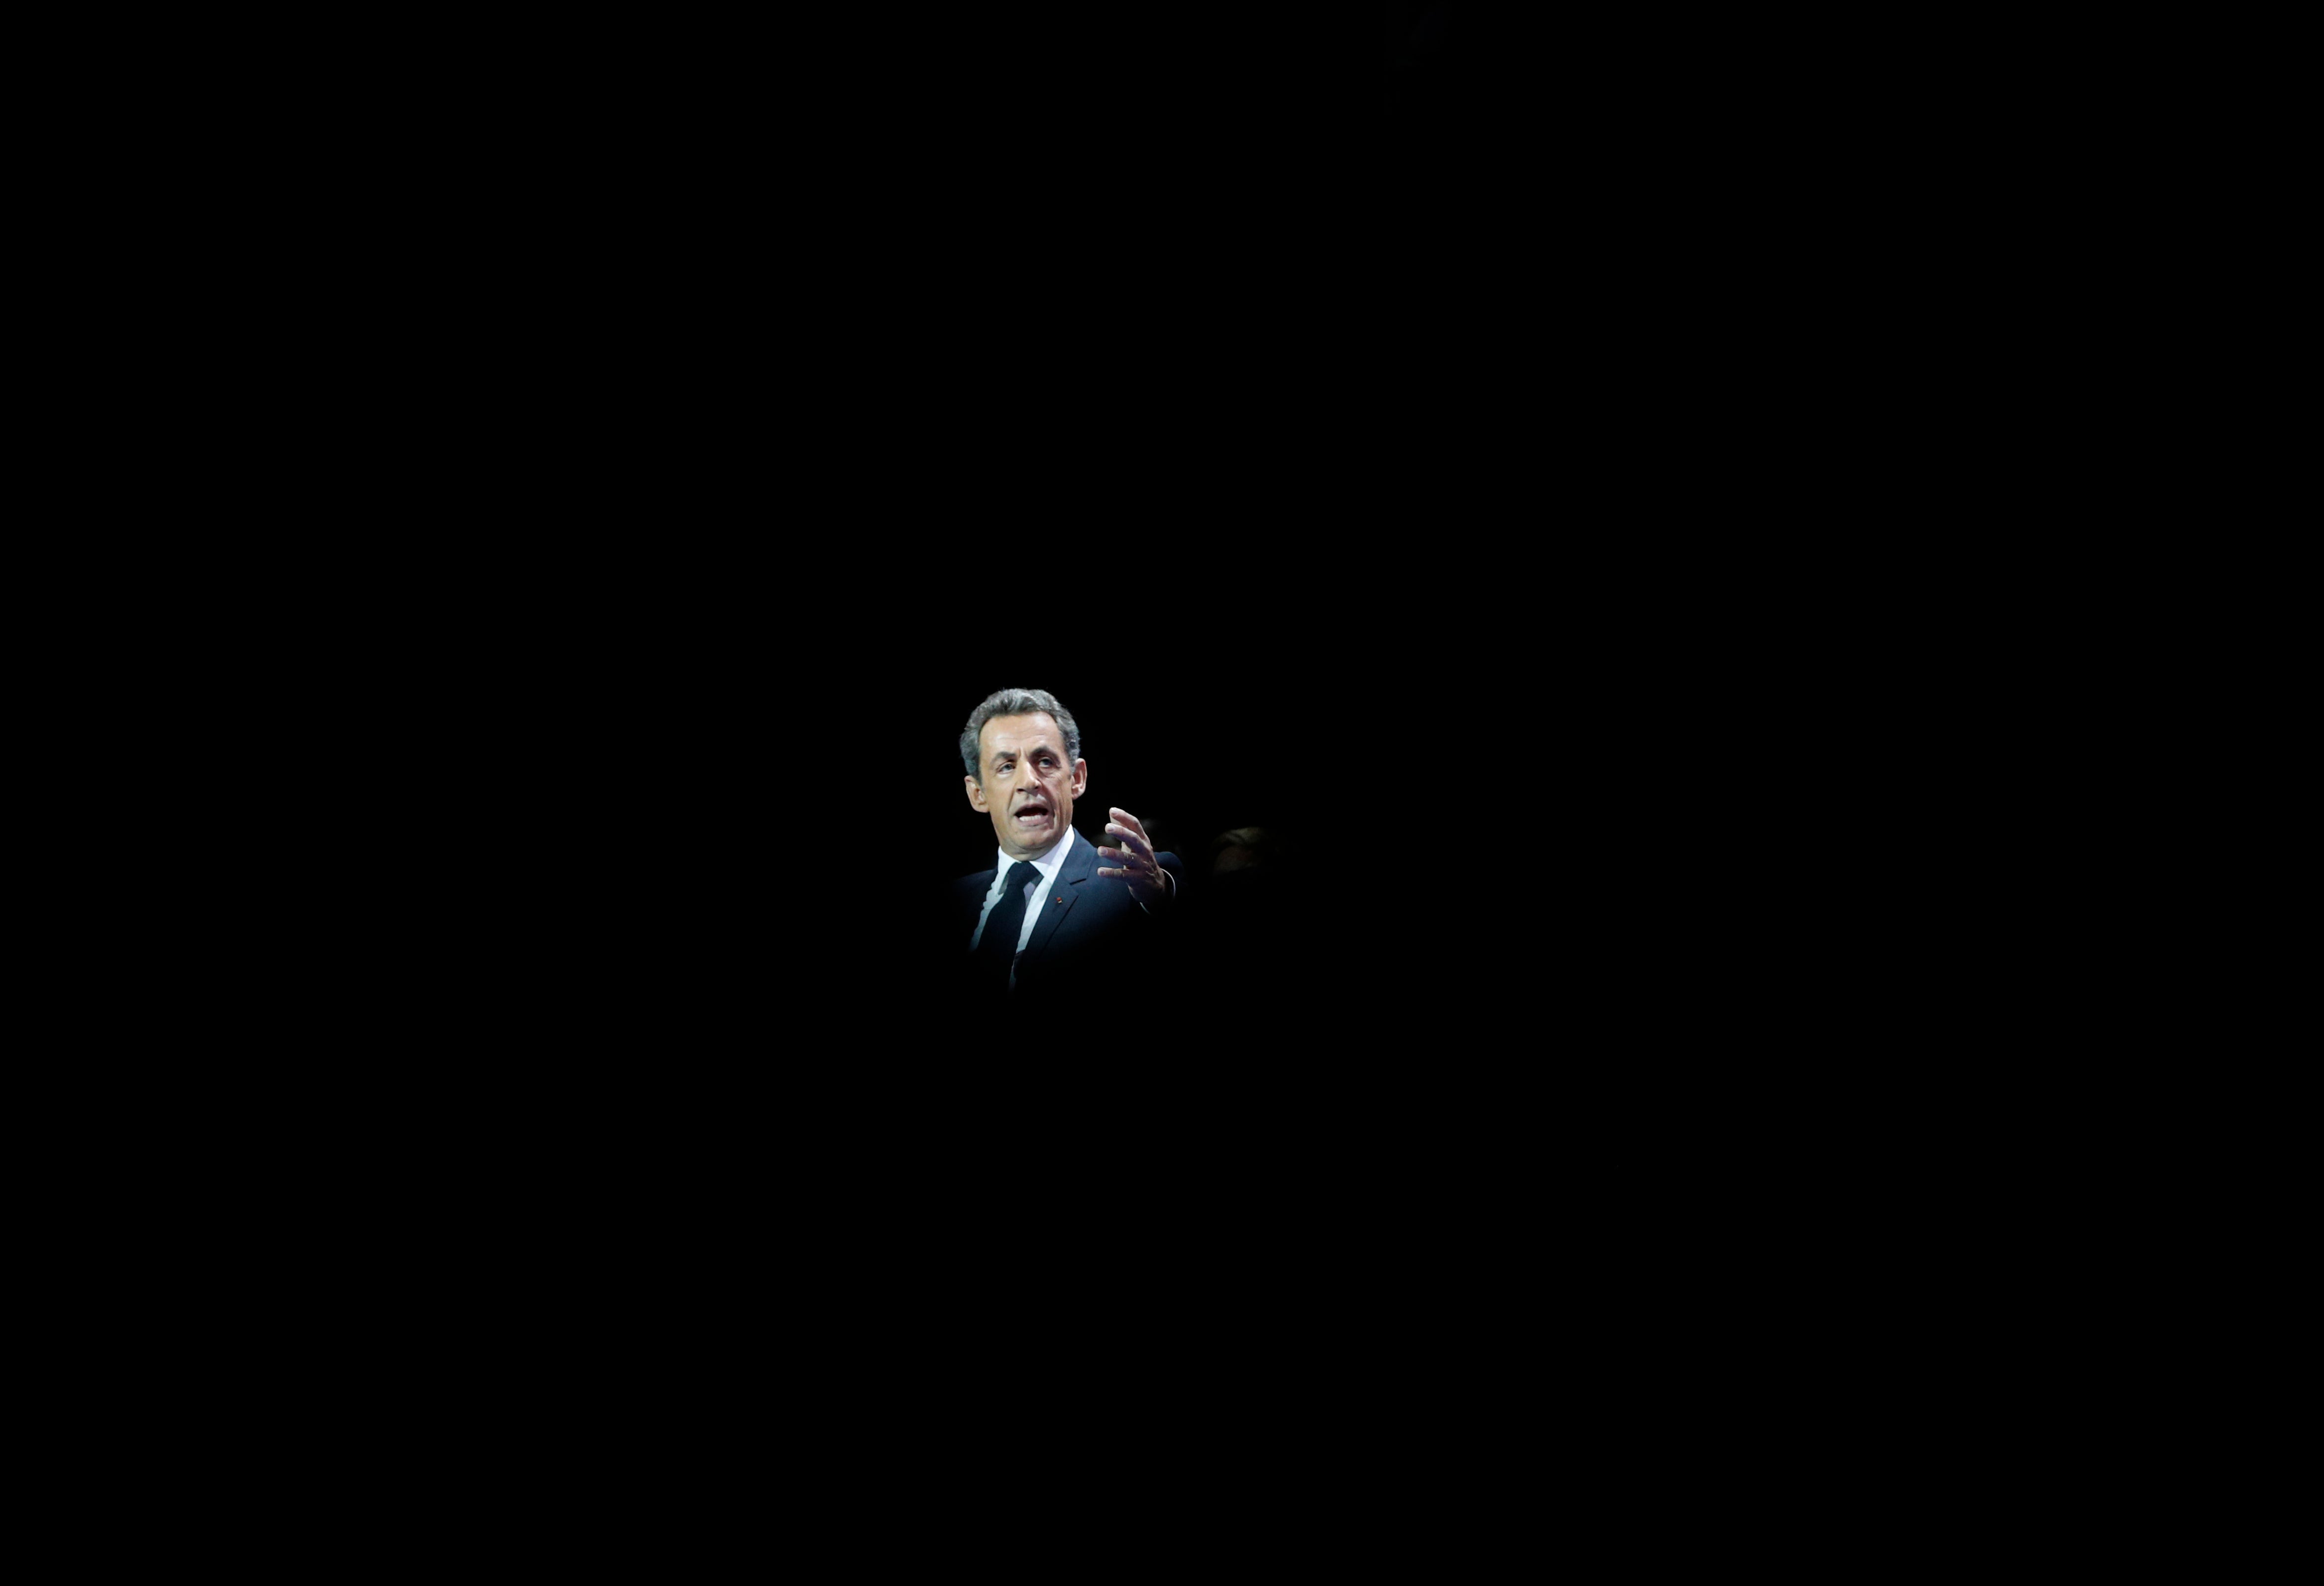 Spotlight fading: Sarkozy came third in the 2016 Republican presidential primary